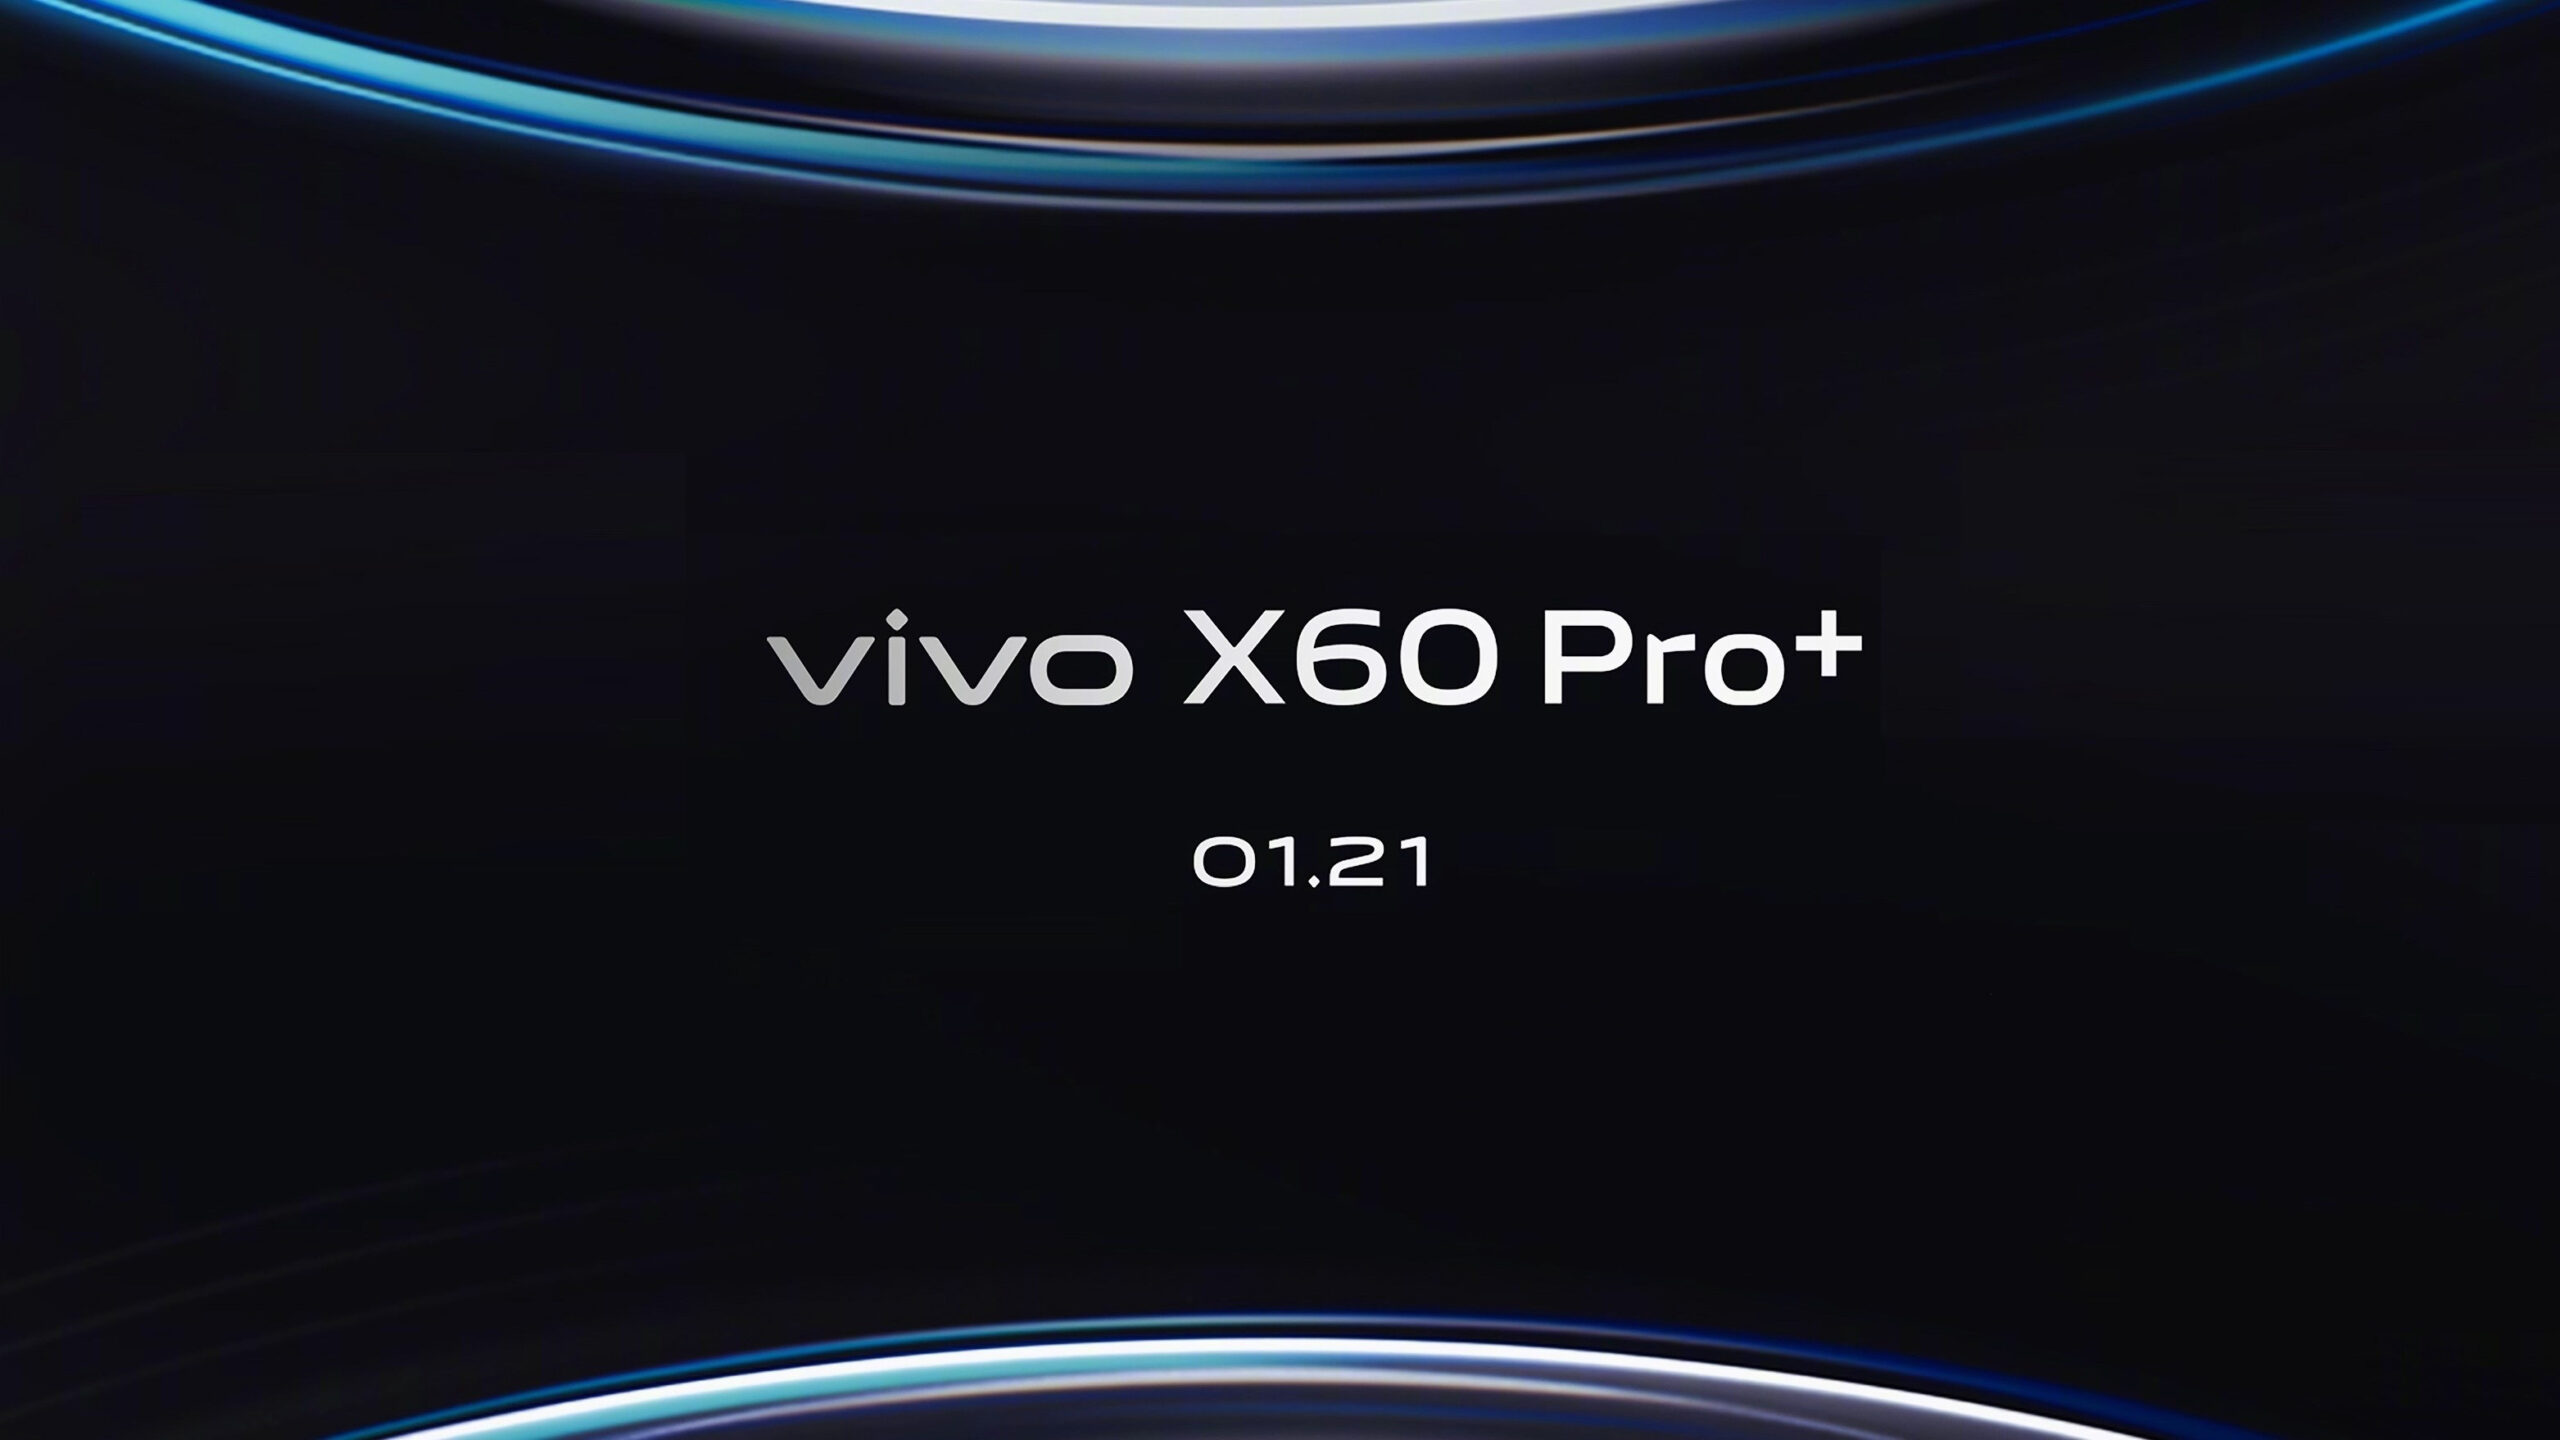 Vivo X60 Pro+ launch confirmed